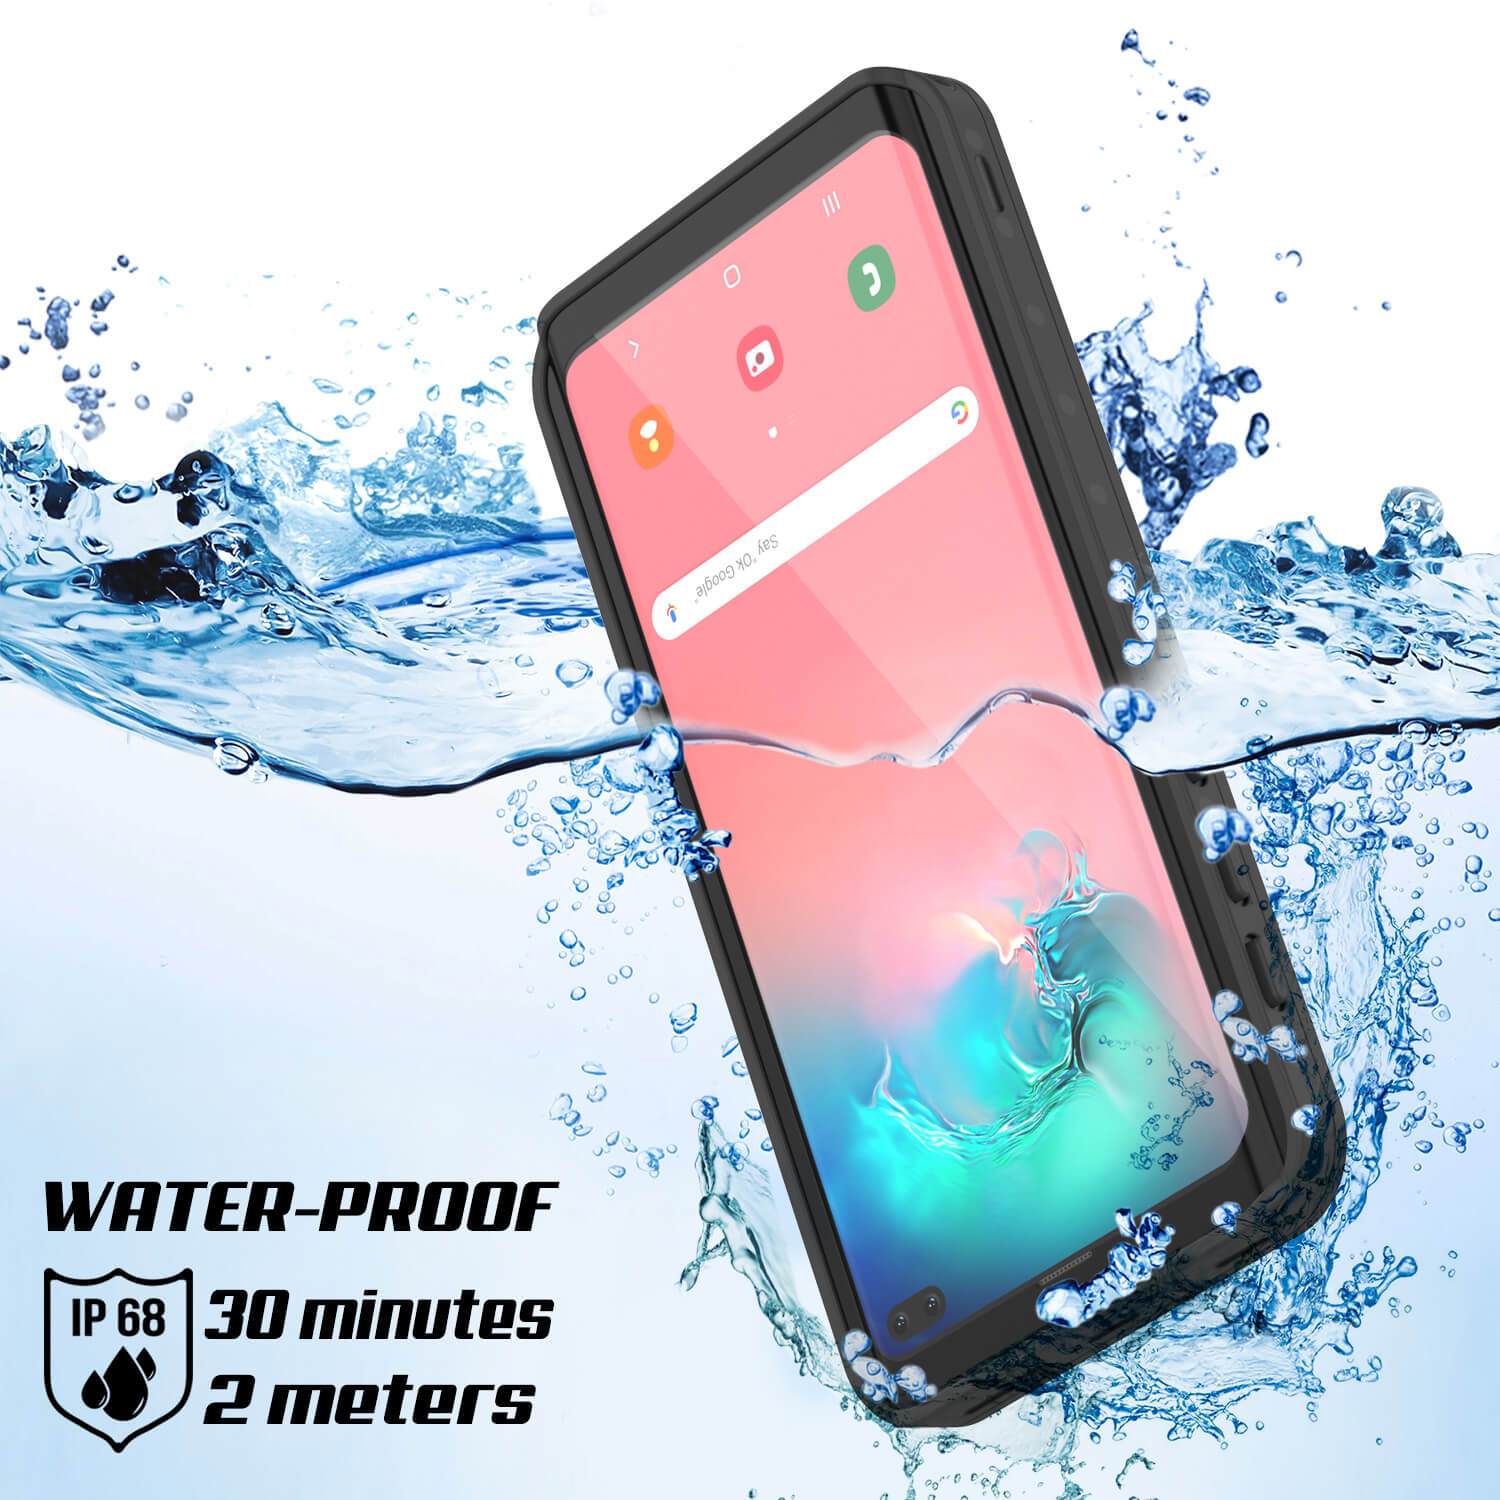 Galaxy S10e Waterproof Case PunkCase StudStar Clear Thin 6.6ft Underwater IP68 Shock/Snow Proof